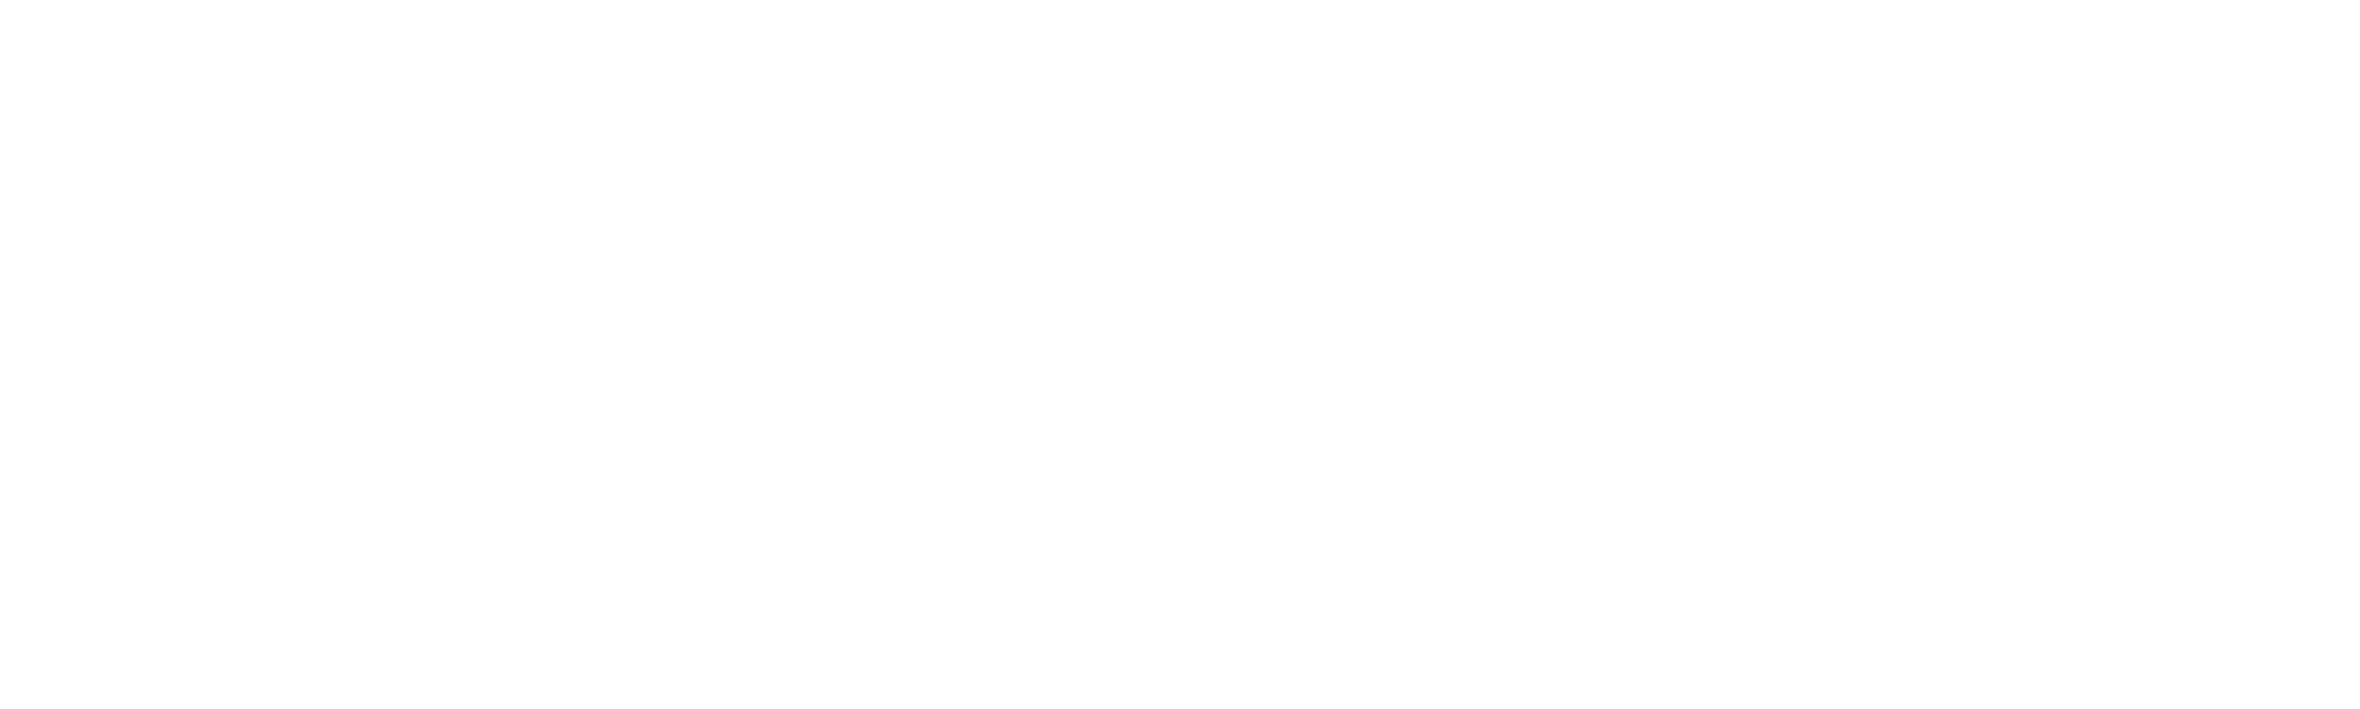 PBG Advisors